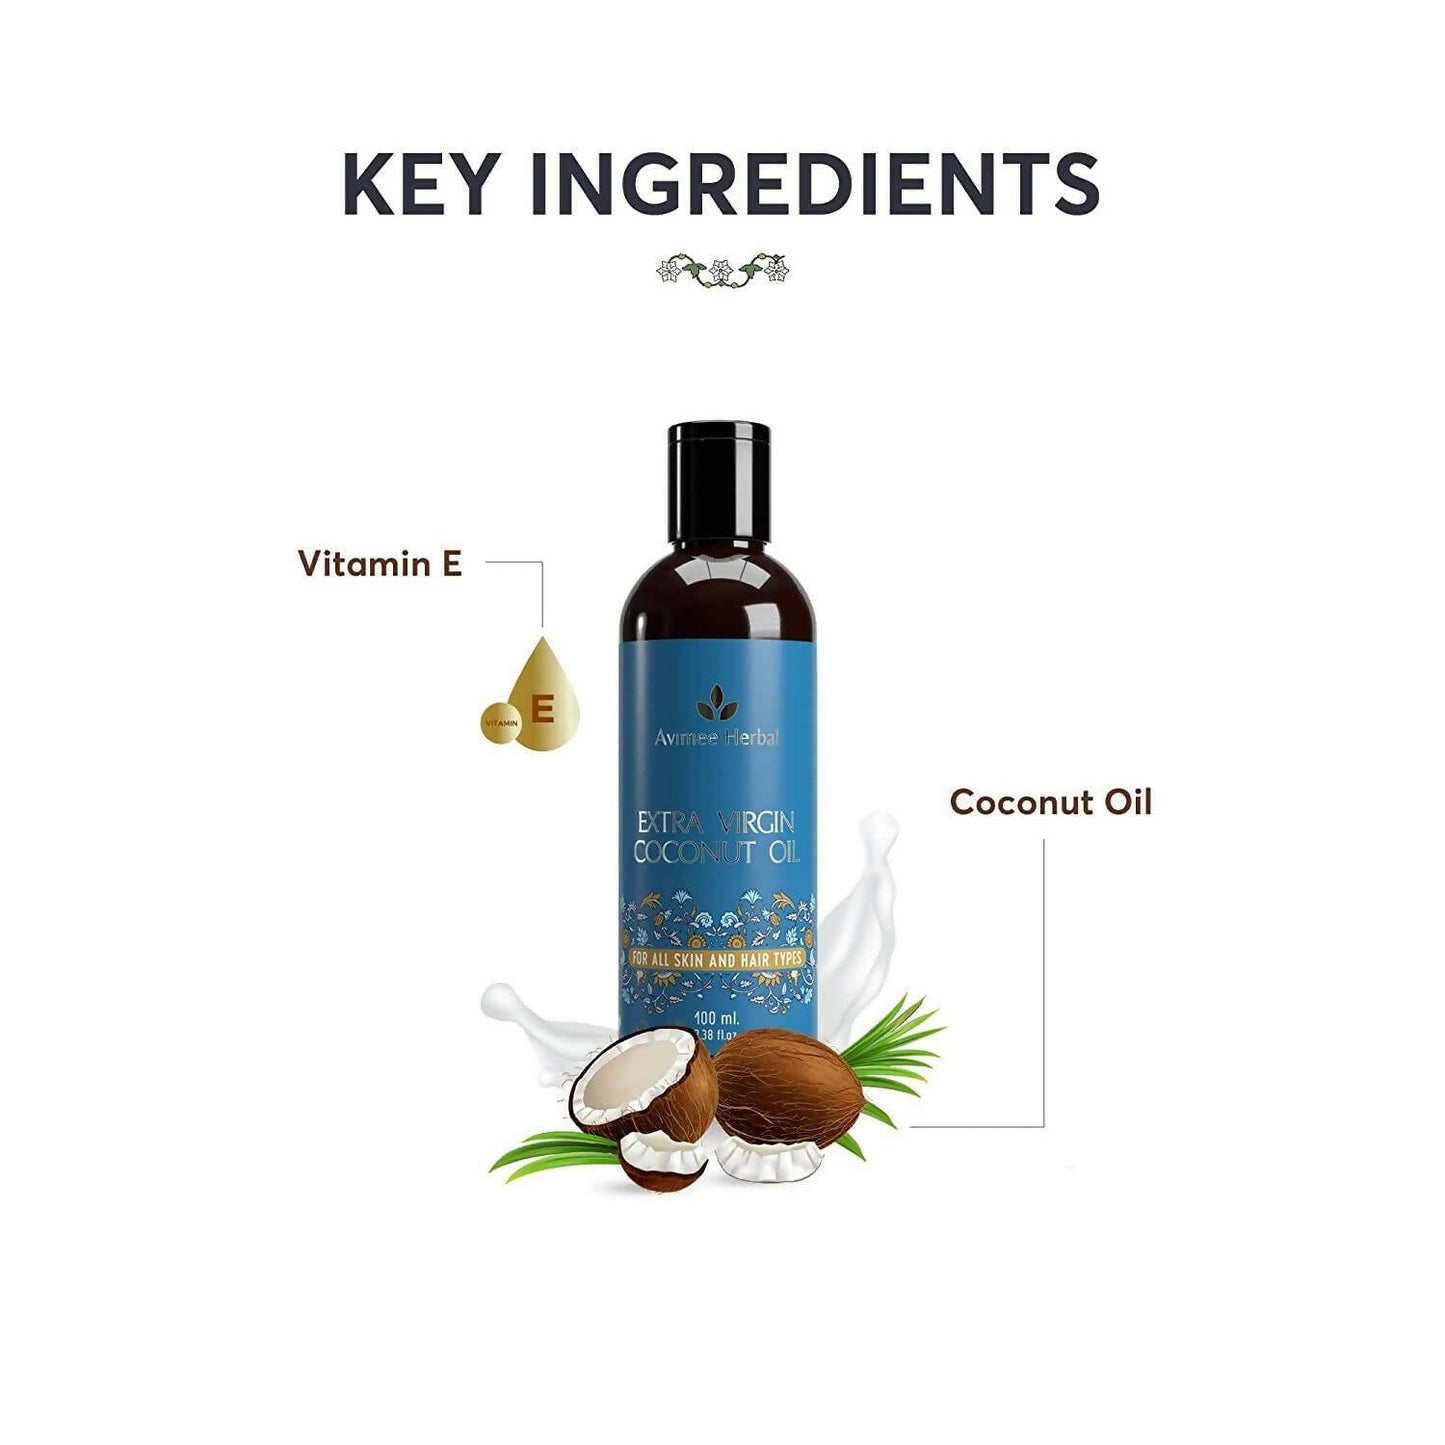 Avimee Herbal Extra Virgin Coconut Oil